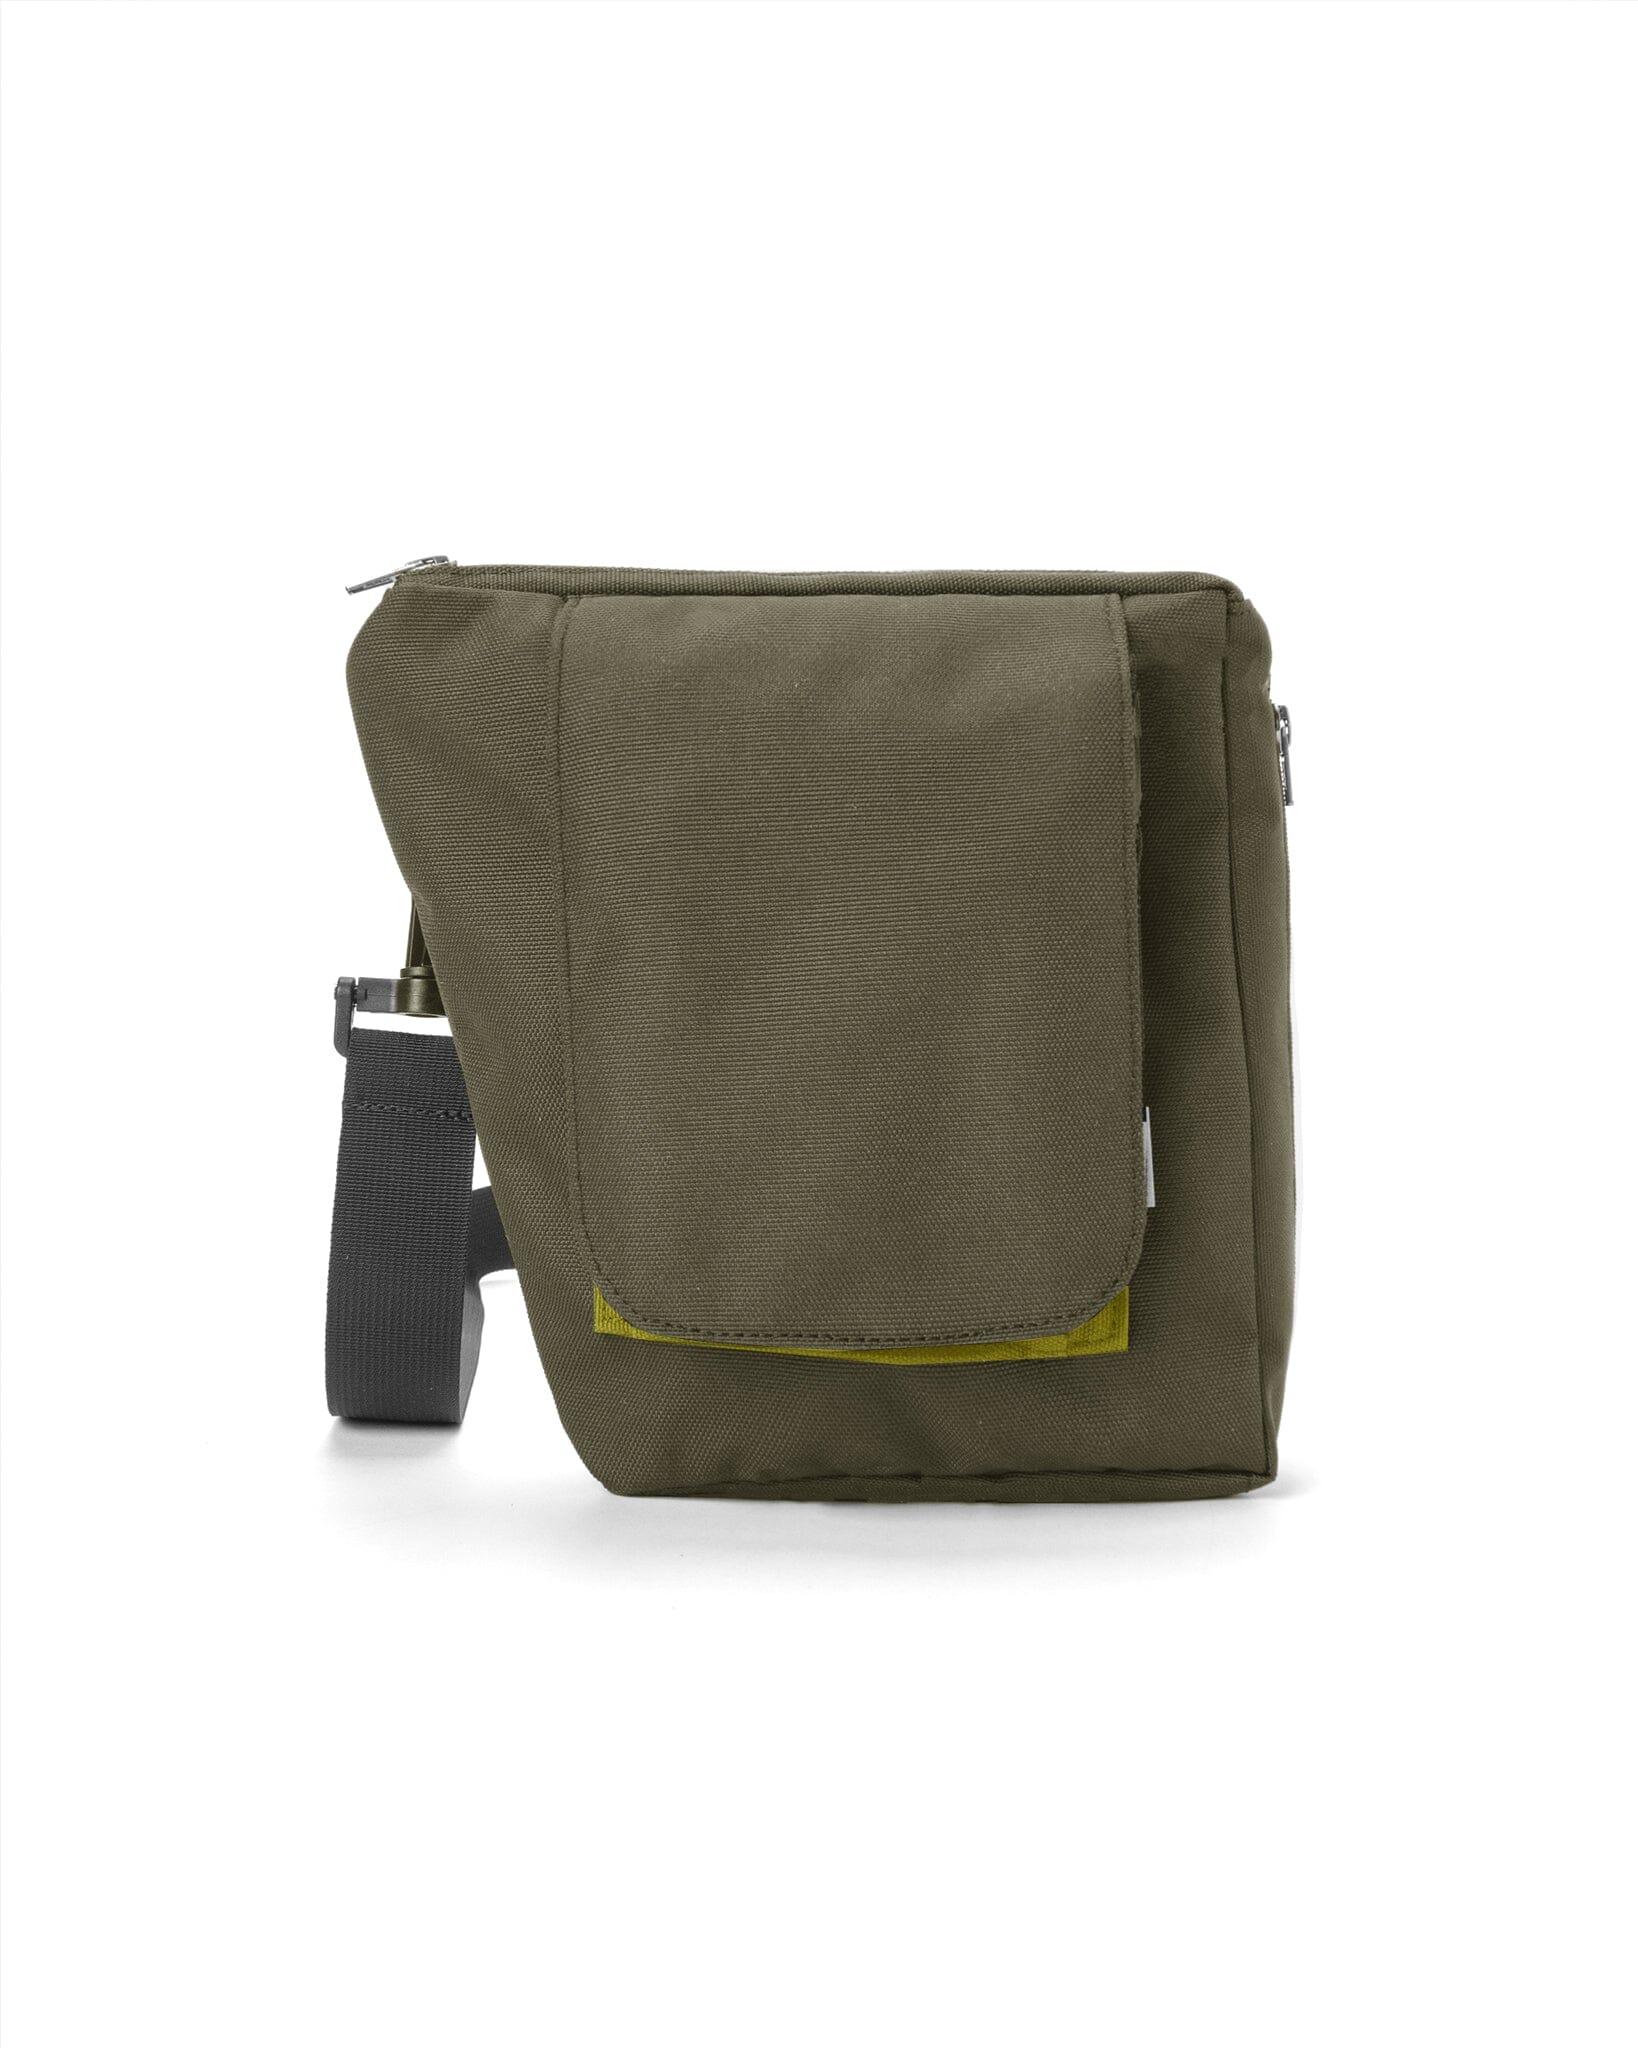 Small Carry - Defiant Olive Cordura Bag bolstr Ranger Green/Yellow Righty 